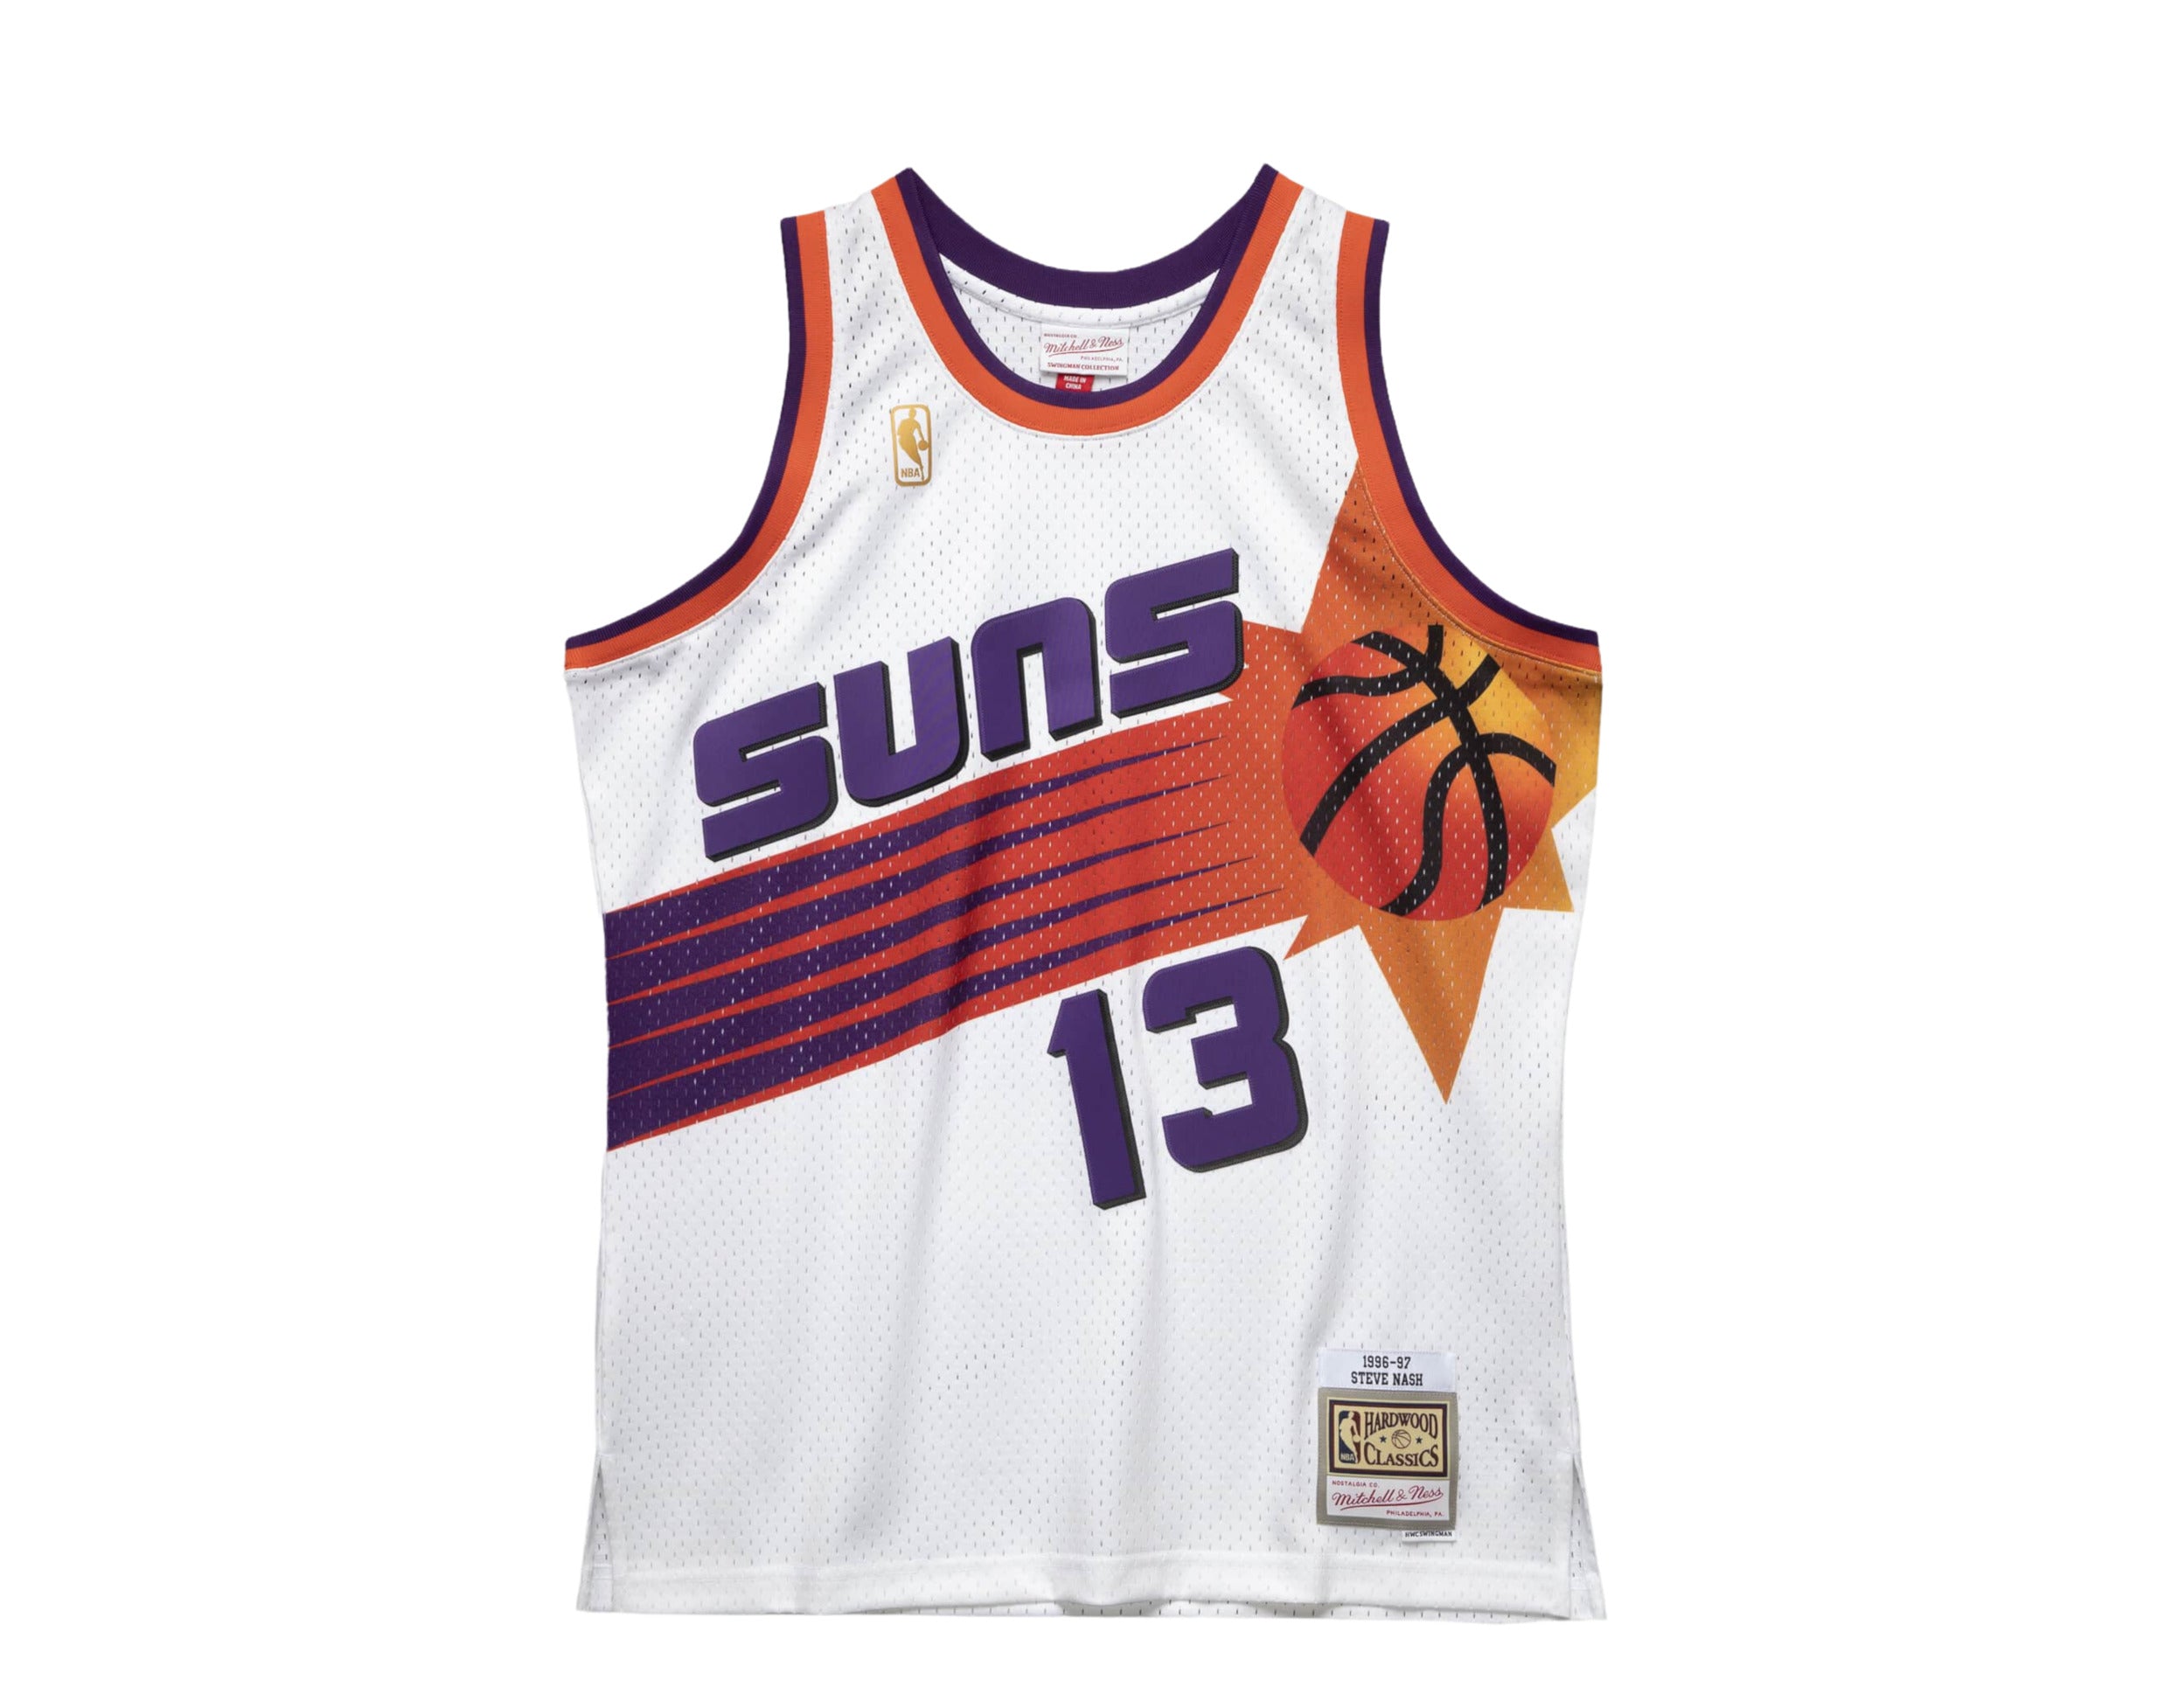 New Era Basic Shirt - NBA Phoenix Suns black - XL 